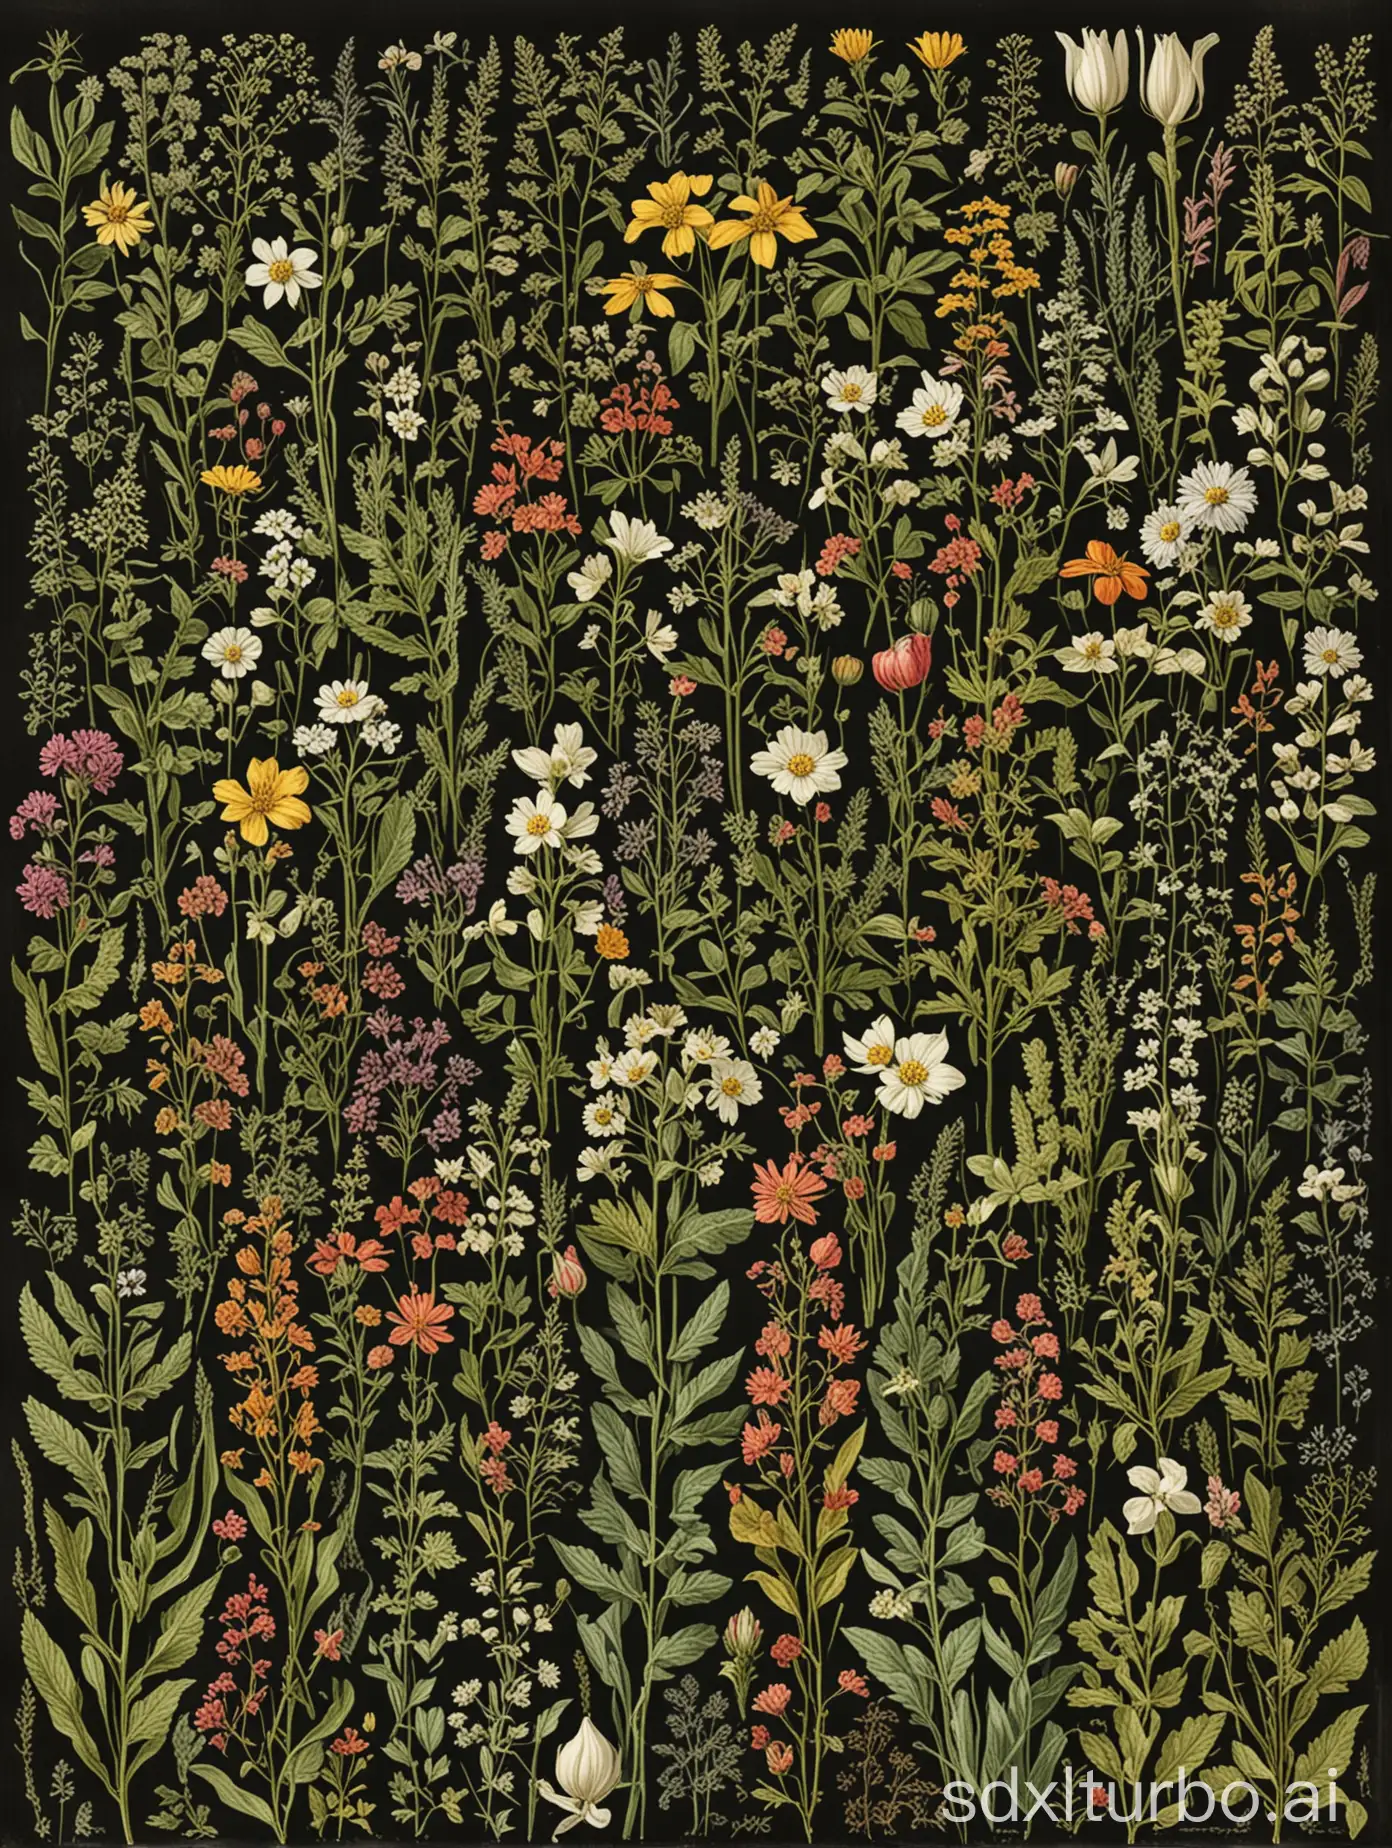 Botanical herbarium poster of wildflowers, hyper detailed